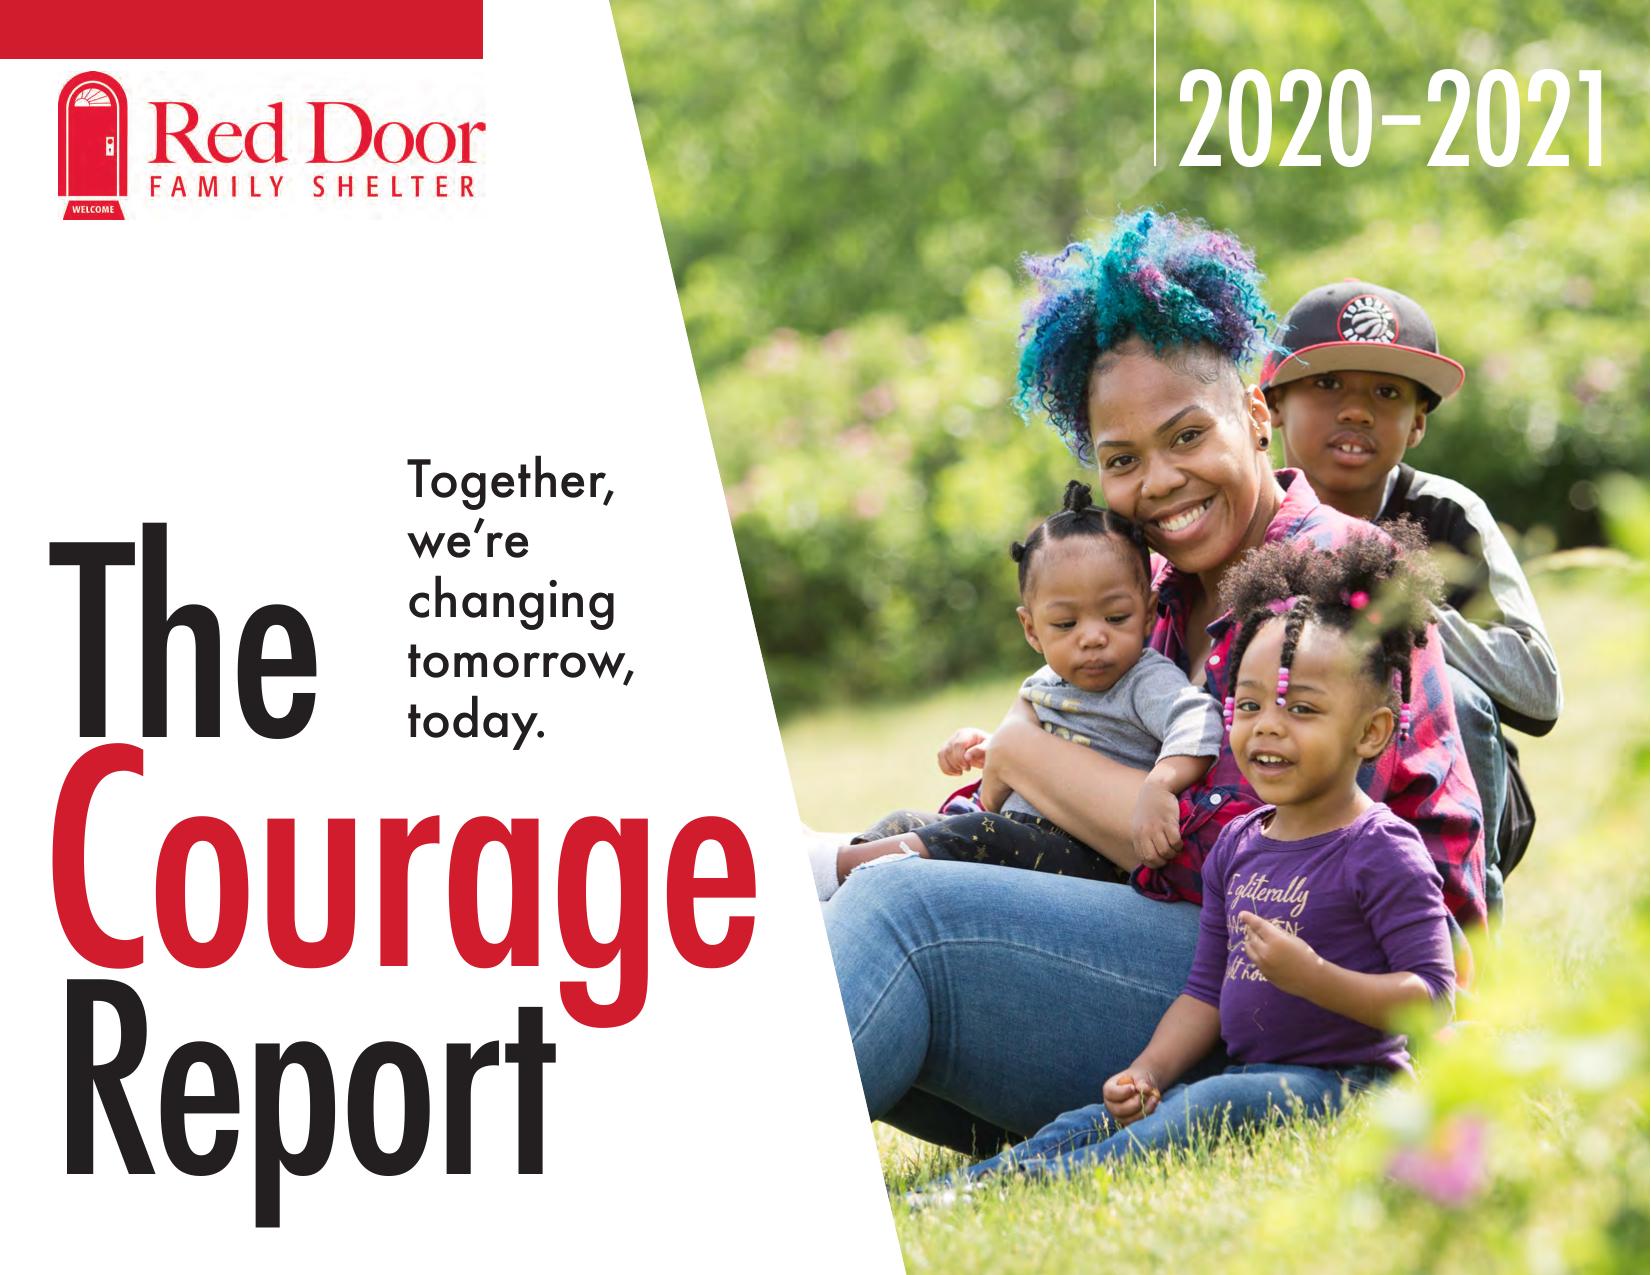 REDDOORSHELTER 2021 Annual Report